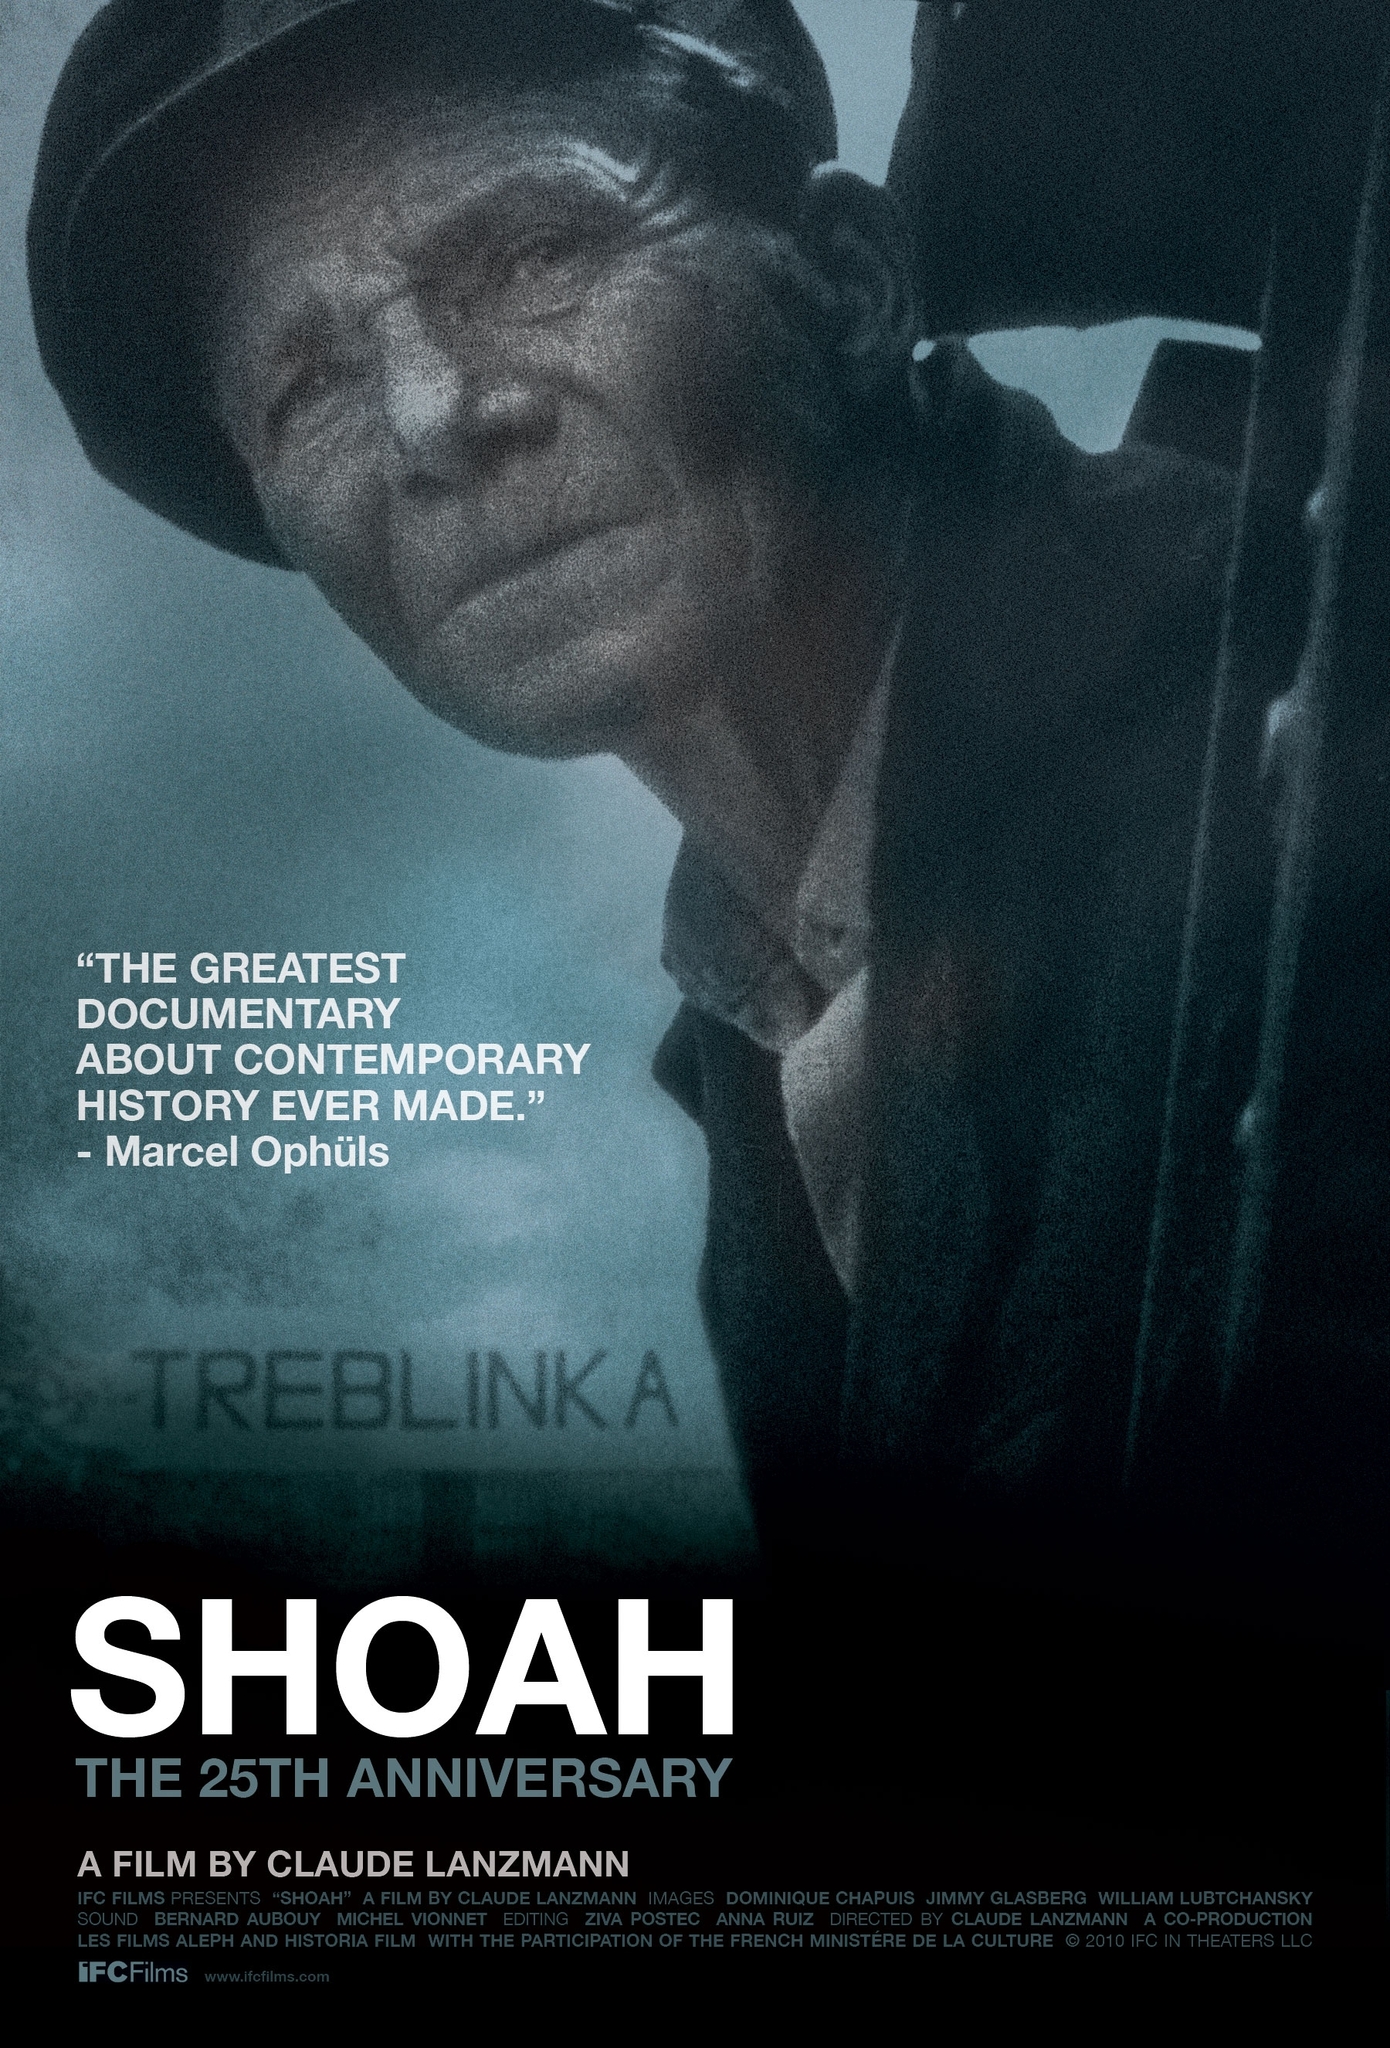 Shoah (DVD or streaming)